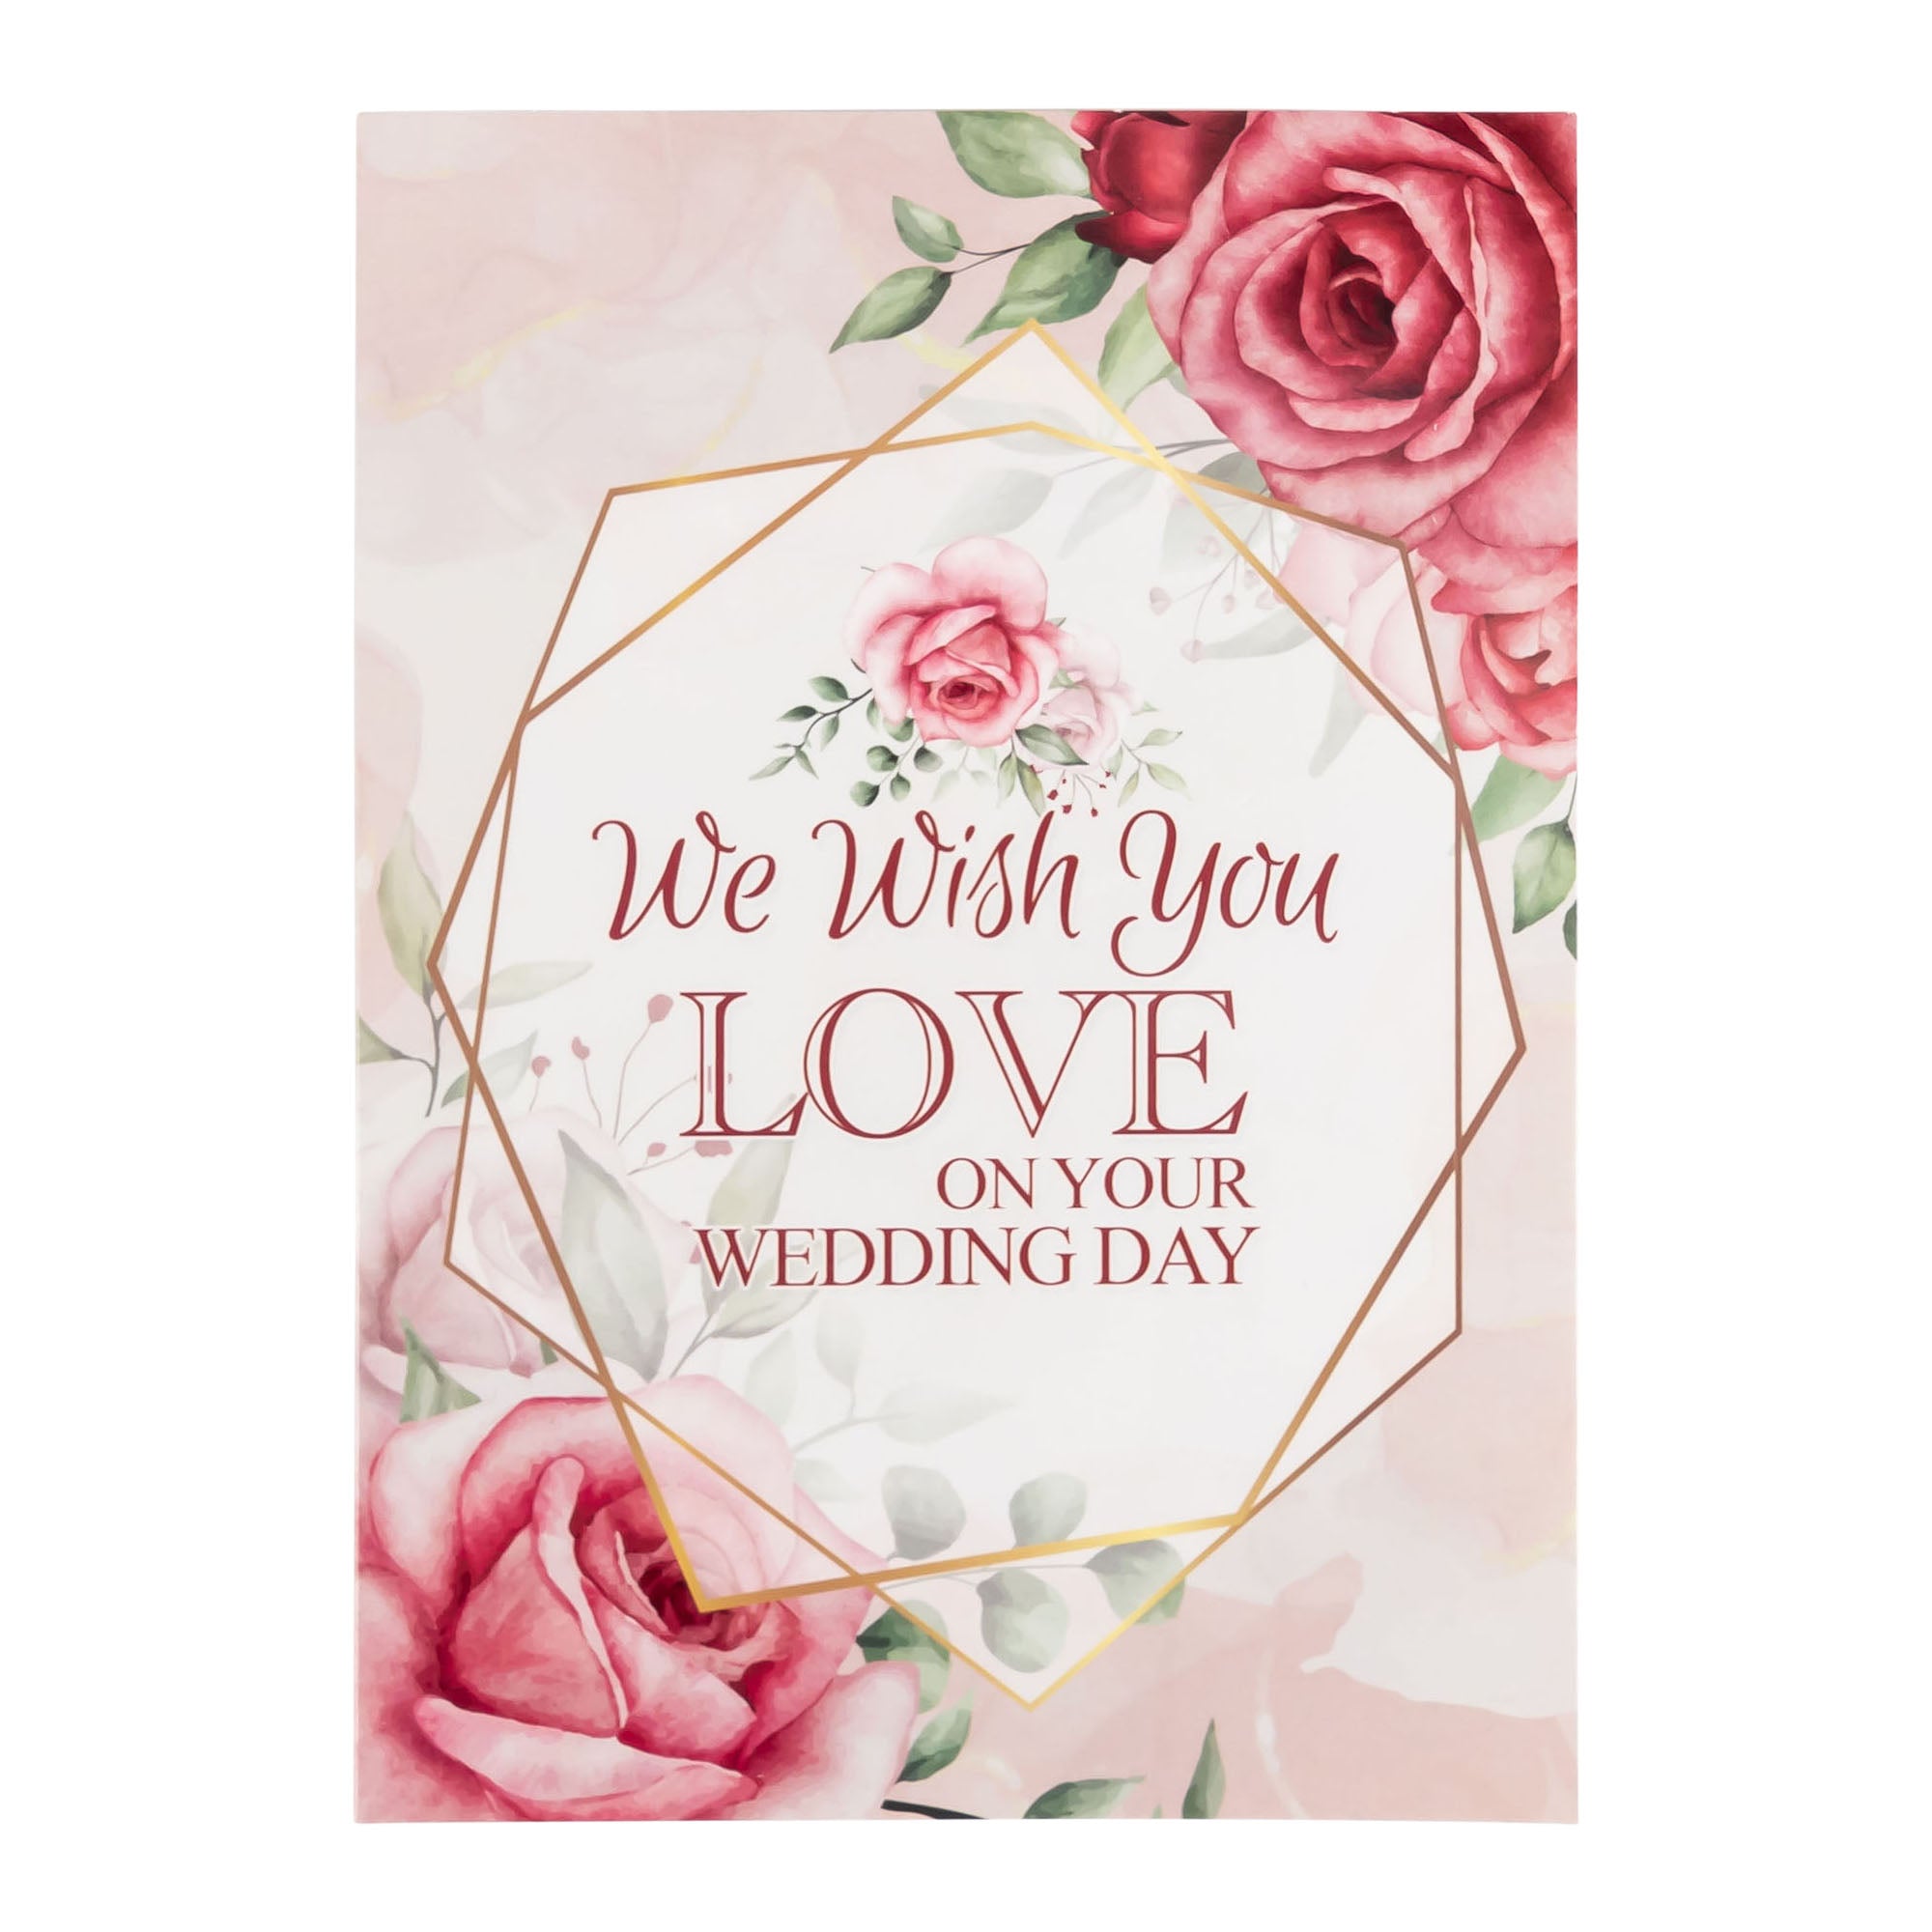 Single Cards - Wedding - Love Matthew 19:6 (6 pk)